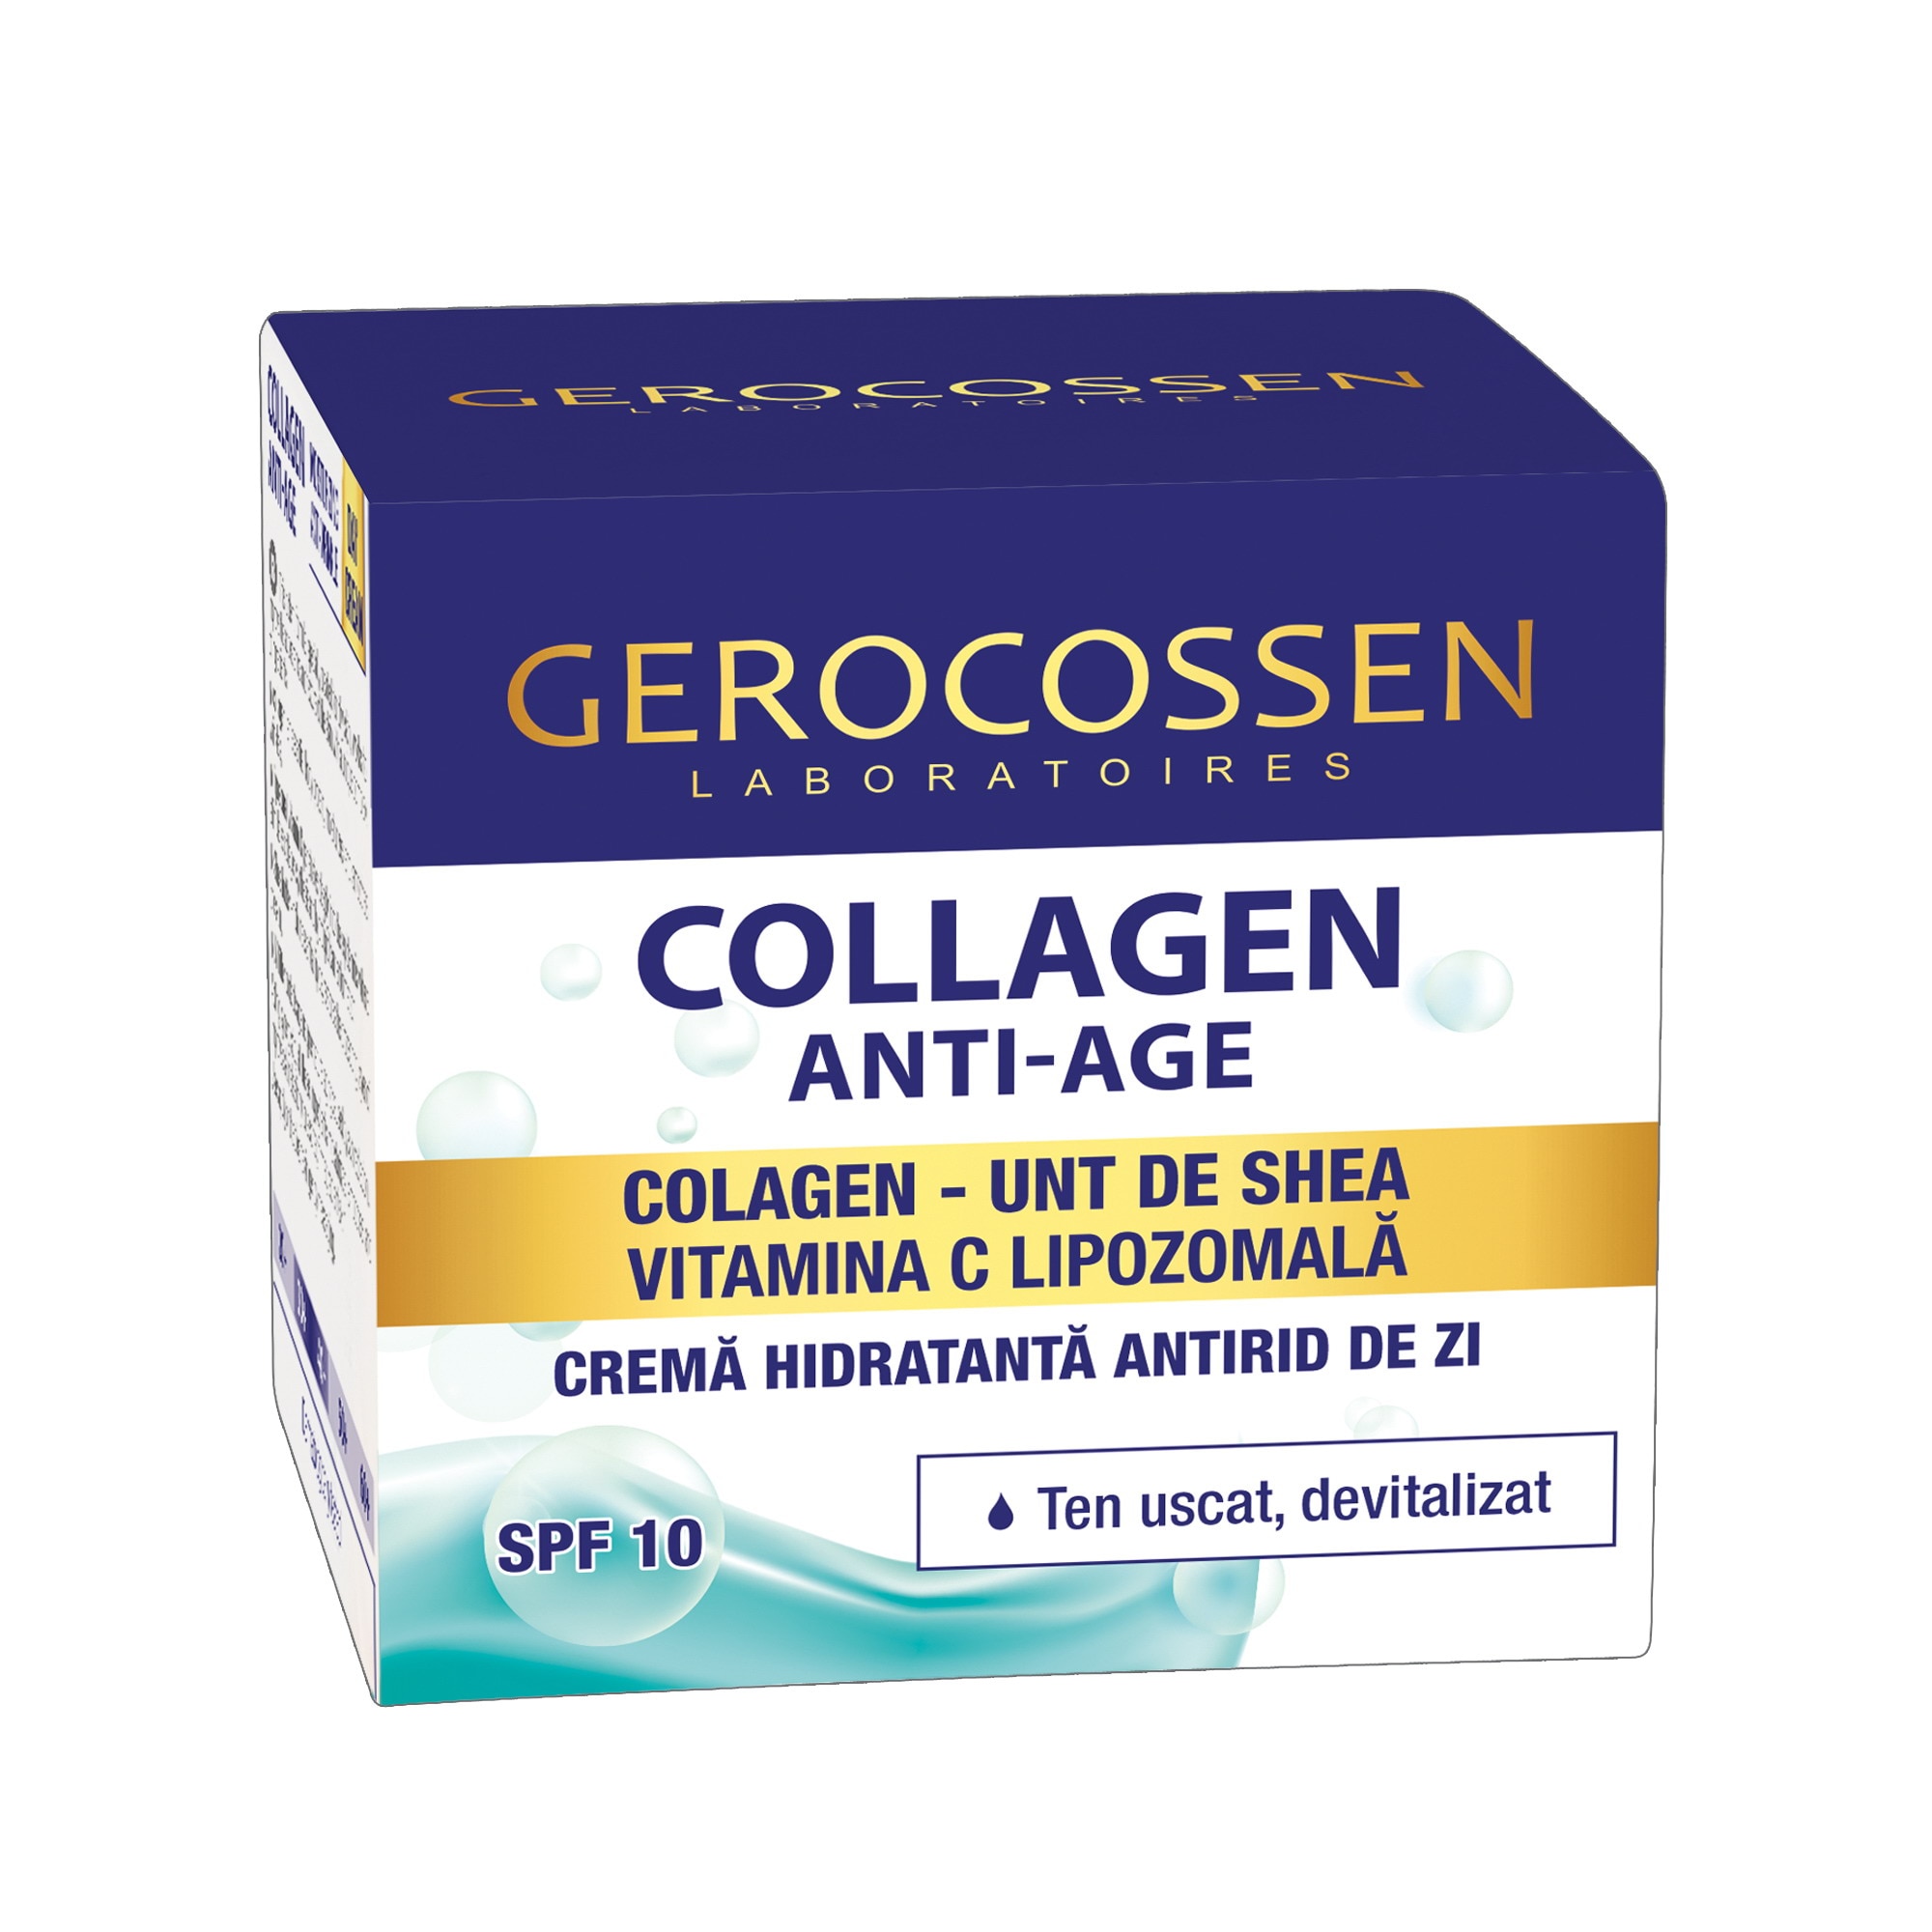 NOU! C-GOLD Ser concentrat cu Colagen Vitamina C 20% & Acid Hialuronic – Allday Natural